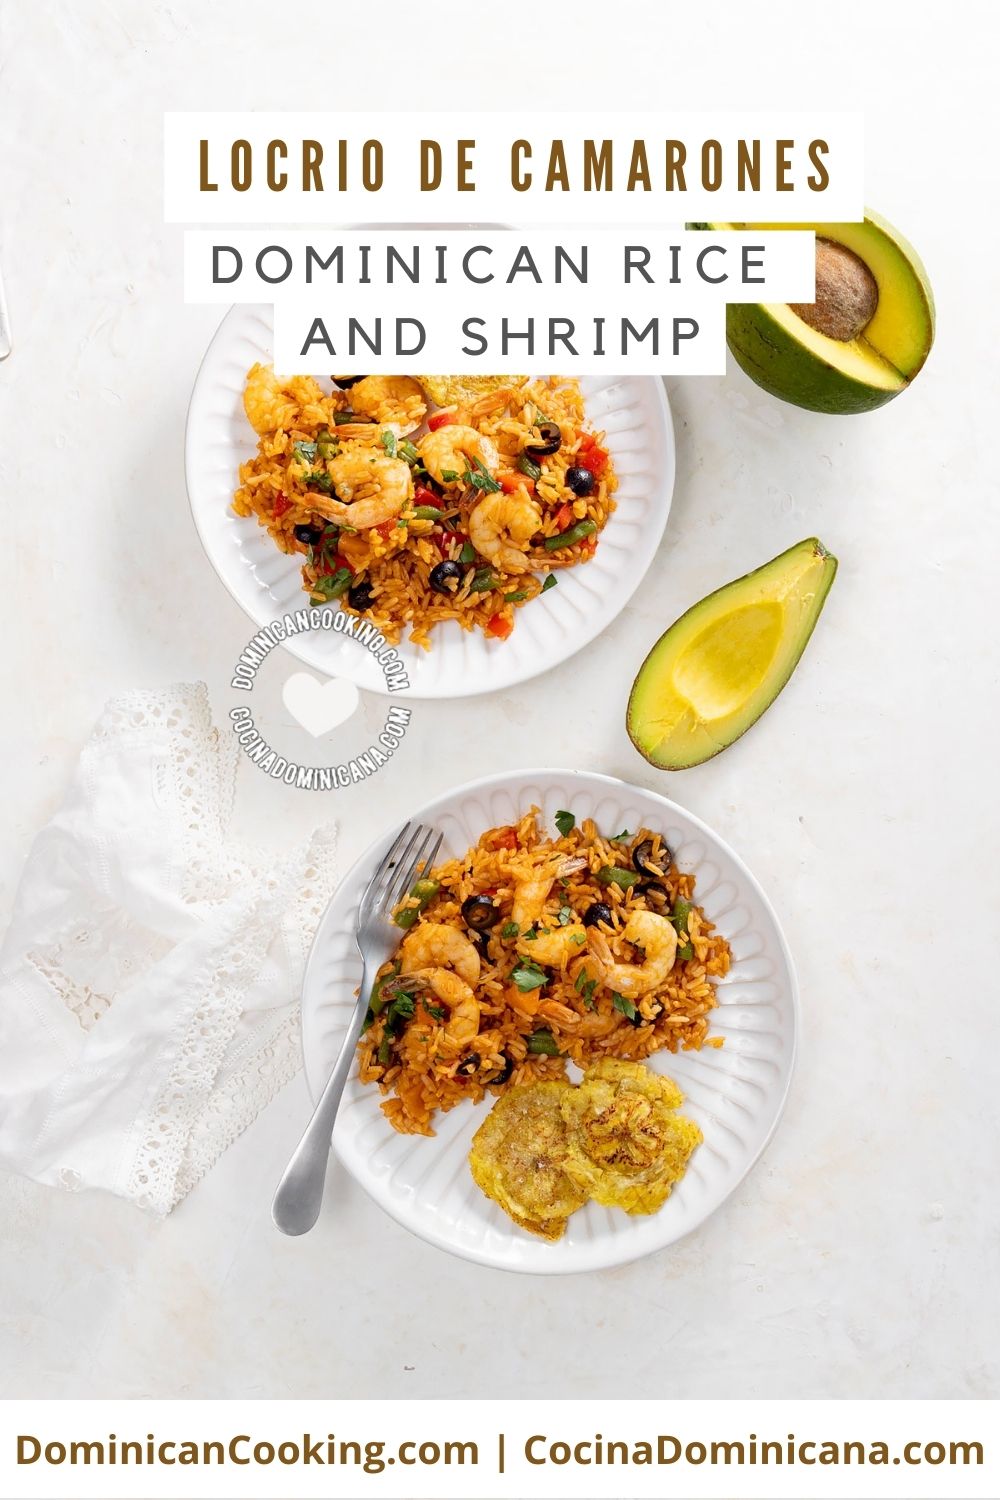 Dominican rice and shrimp recipe.